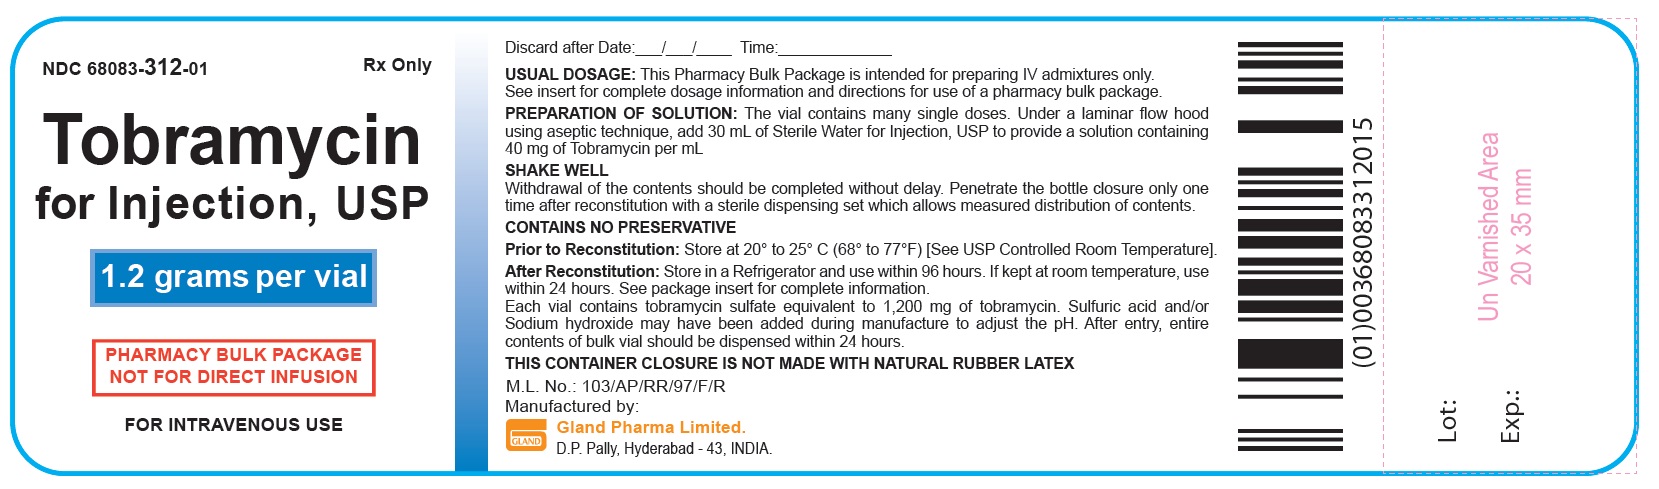 tobramycin-container-label